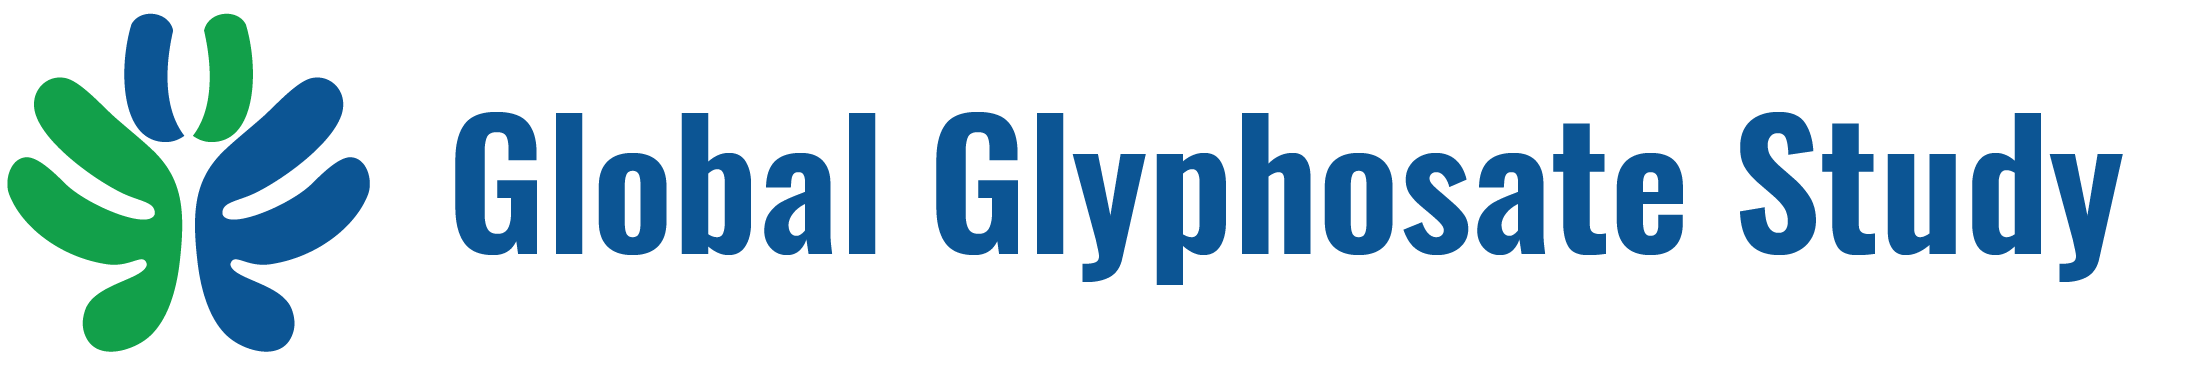 Global Glyphosate Study